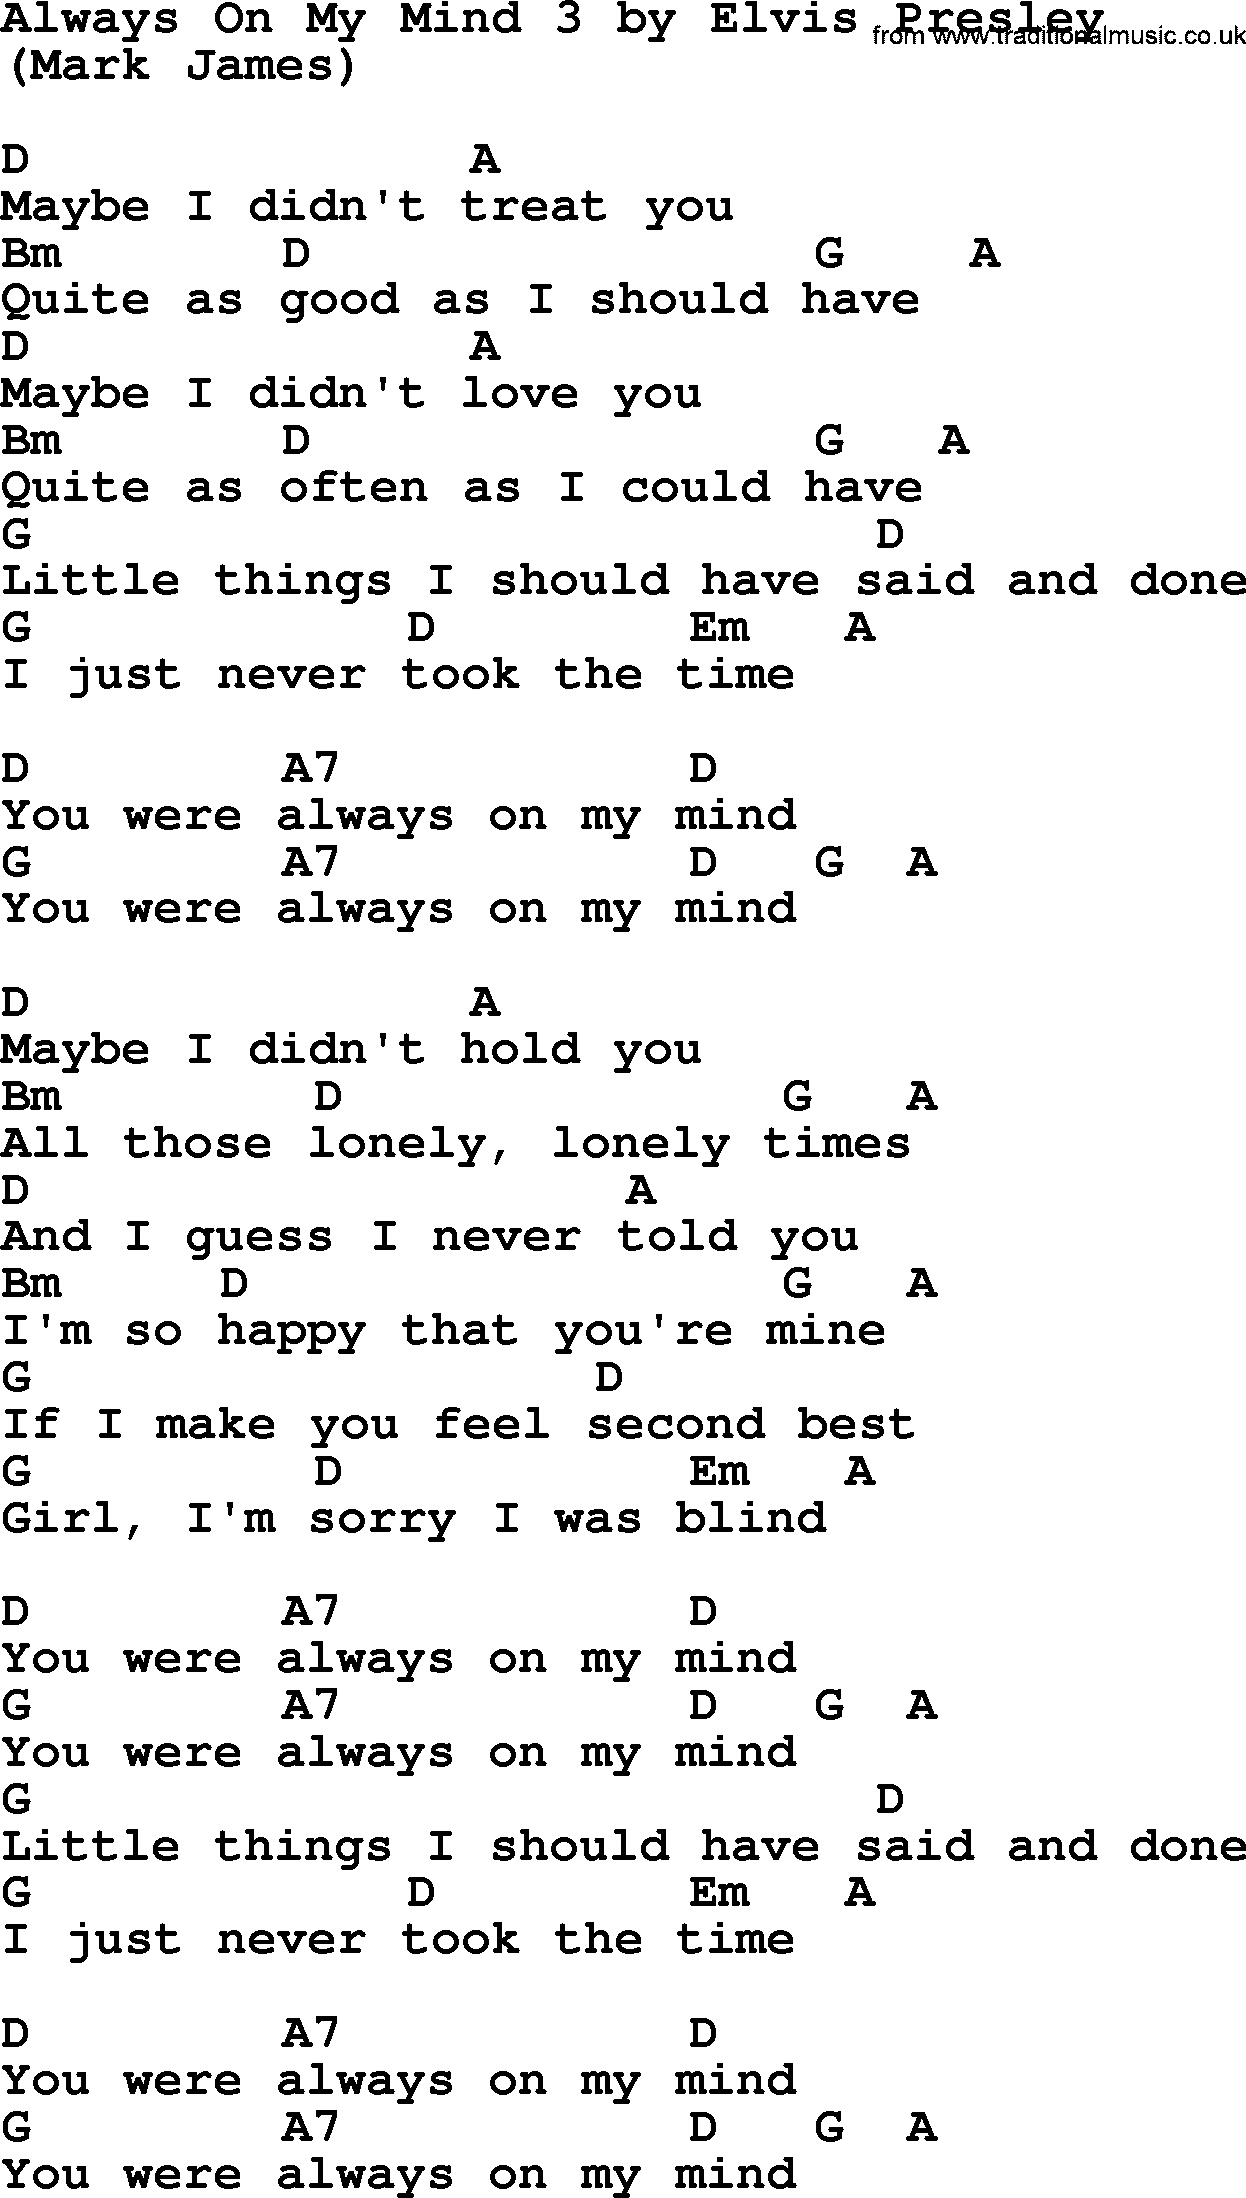 Elvis Presley song: Always On My Mind 3, lyrics and chords